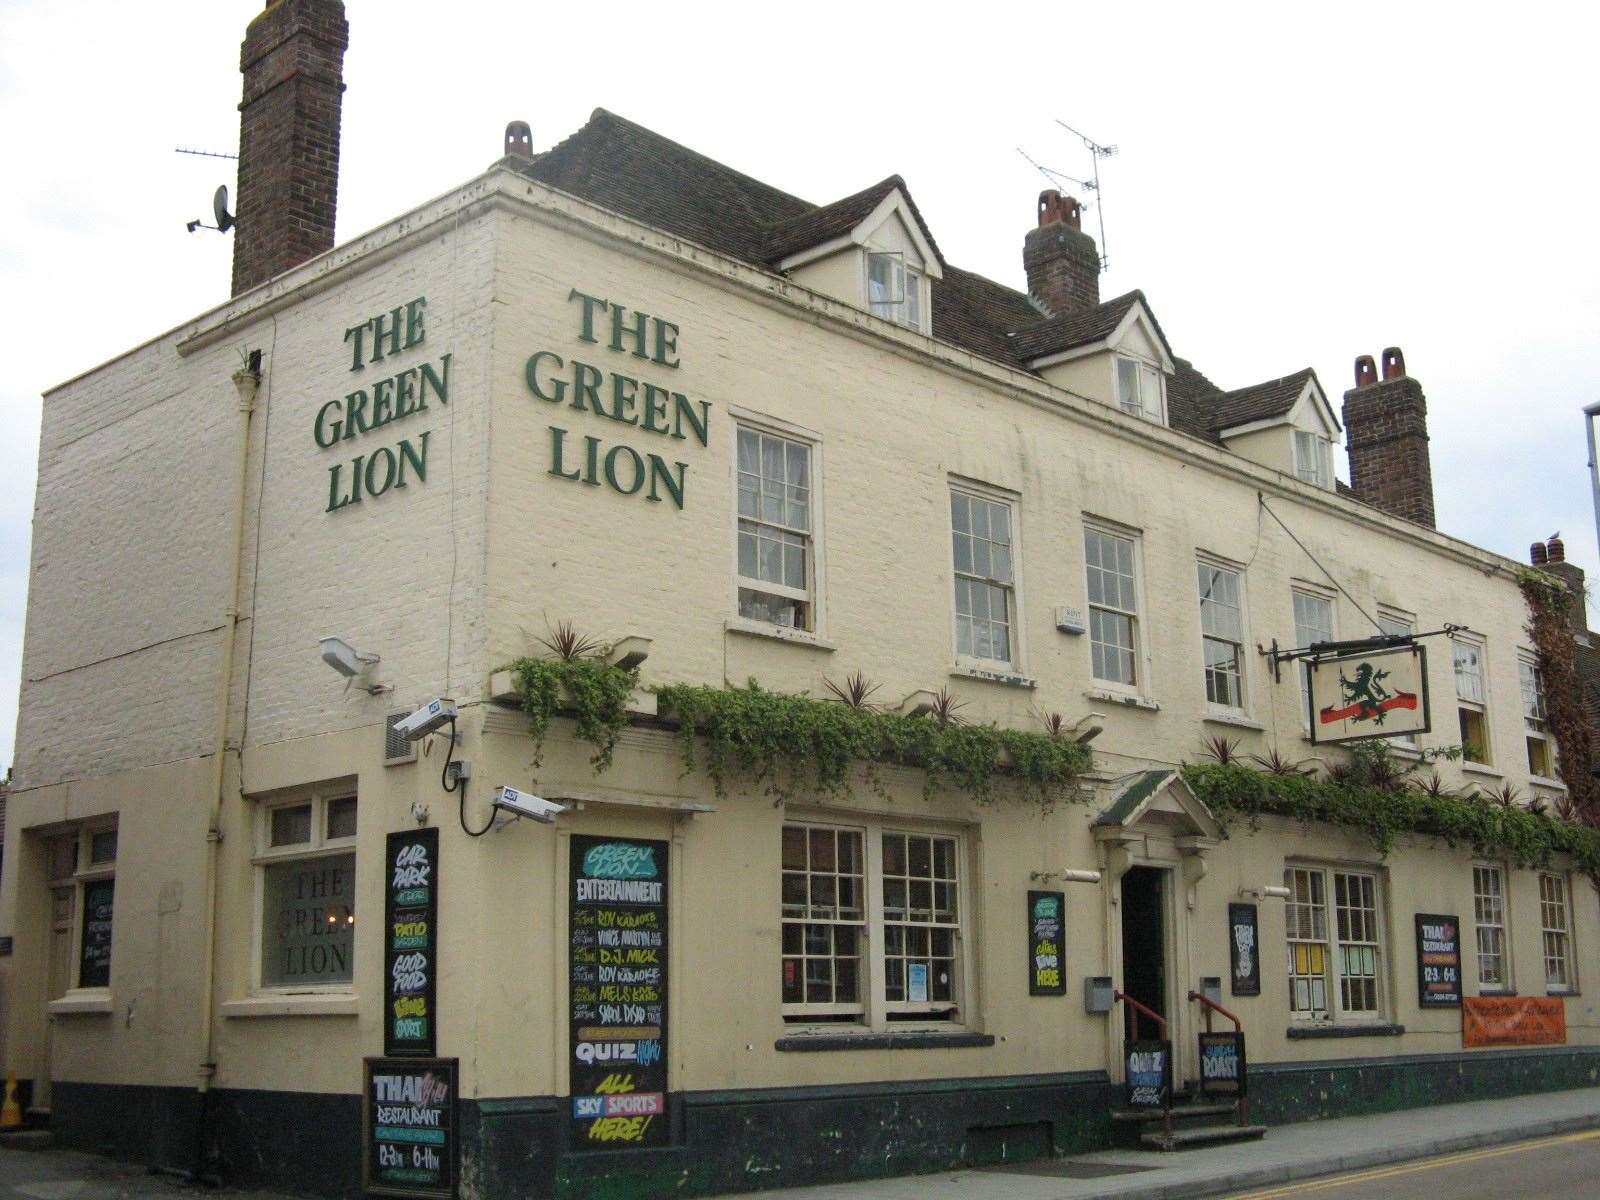 The Green Lion pub in Rainham High Street back in 2008